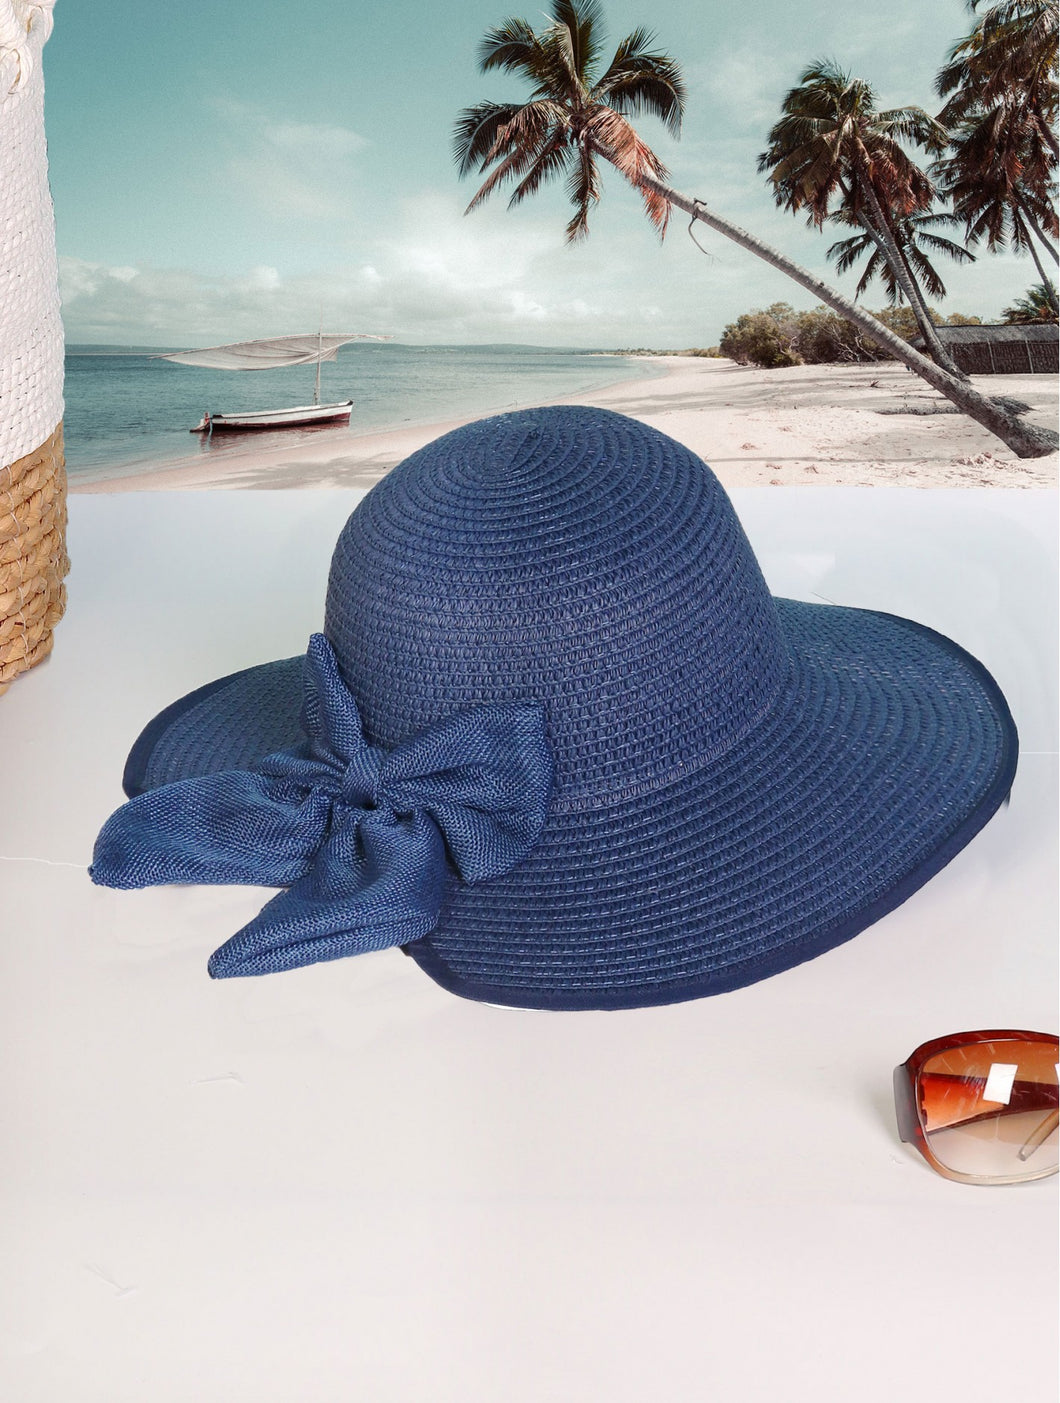 Hats - Wide Brim Straw Sun/Beach Hat with Bow - Blue